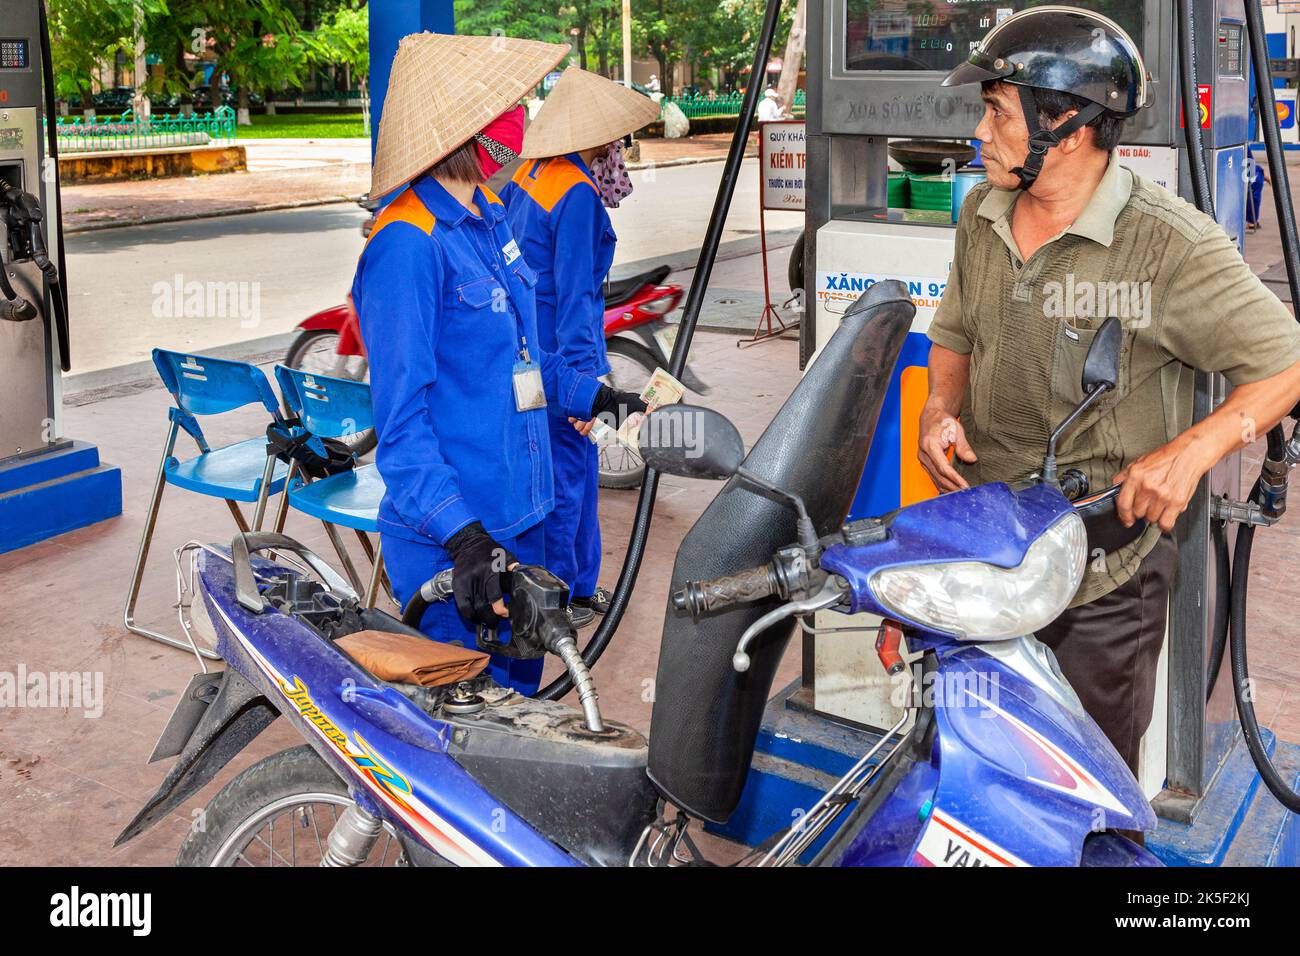 Petrol filling station attendant wearing uniform and bamboo hat filling up motorcycle, Hai Phong, Vietnam Stock Photo